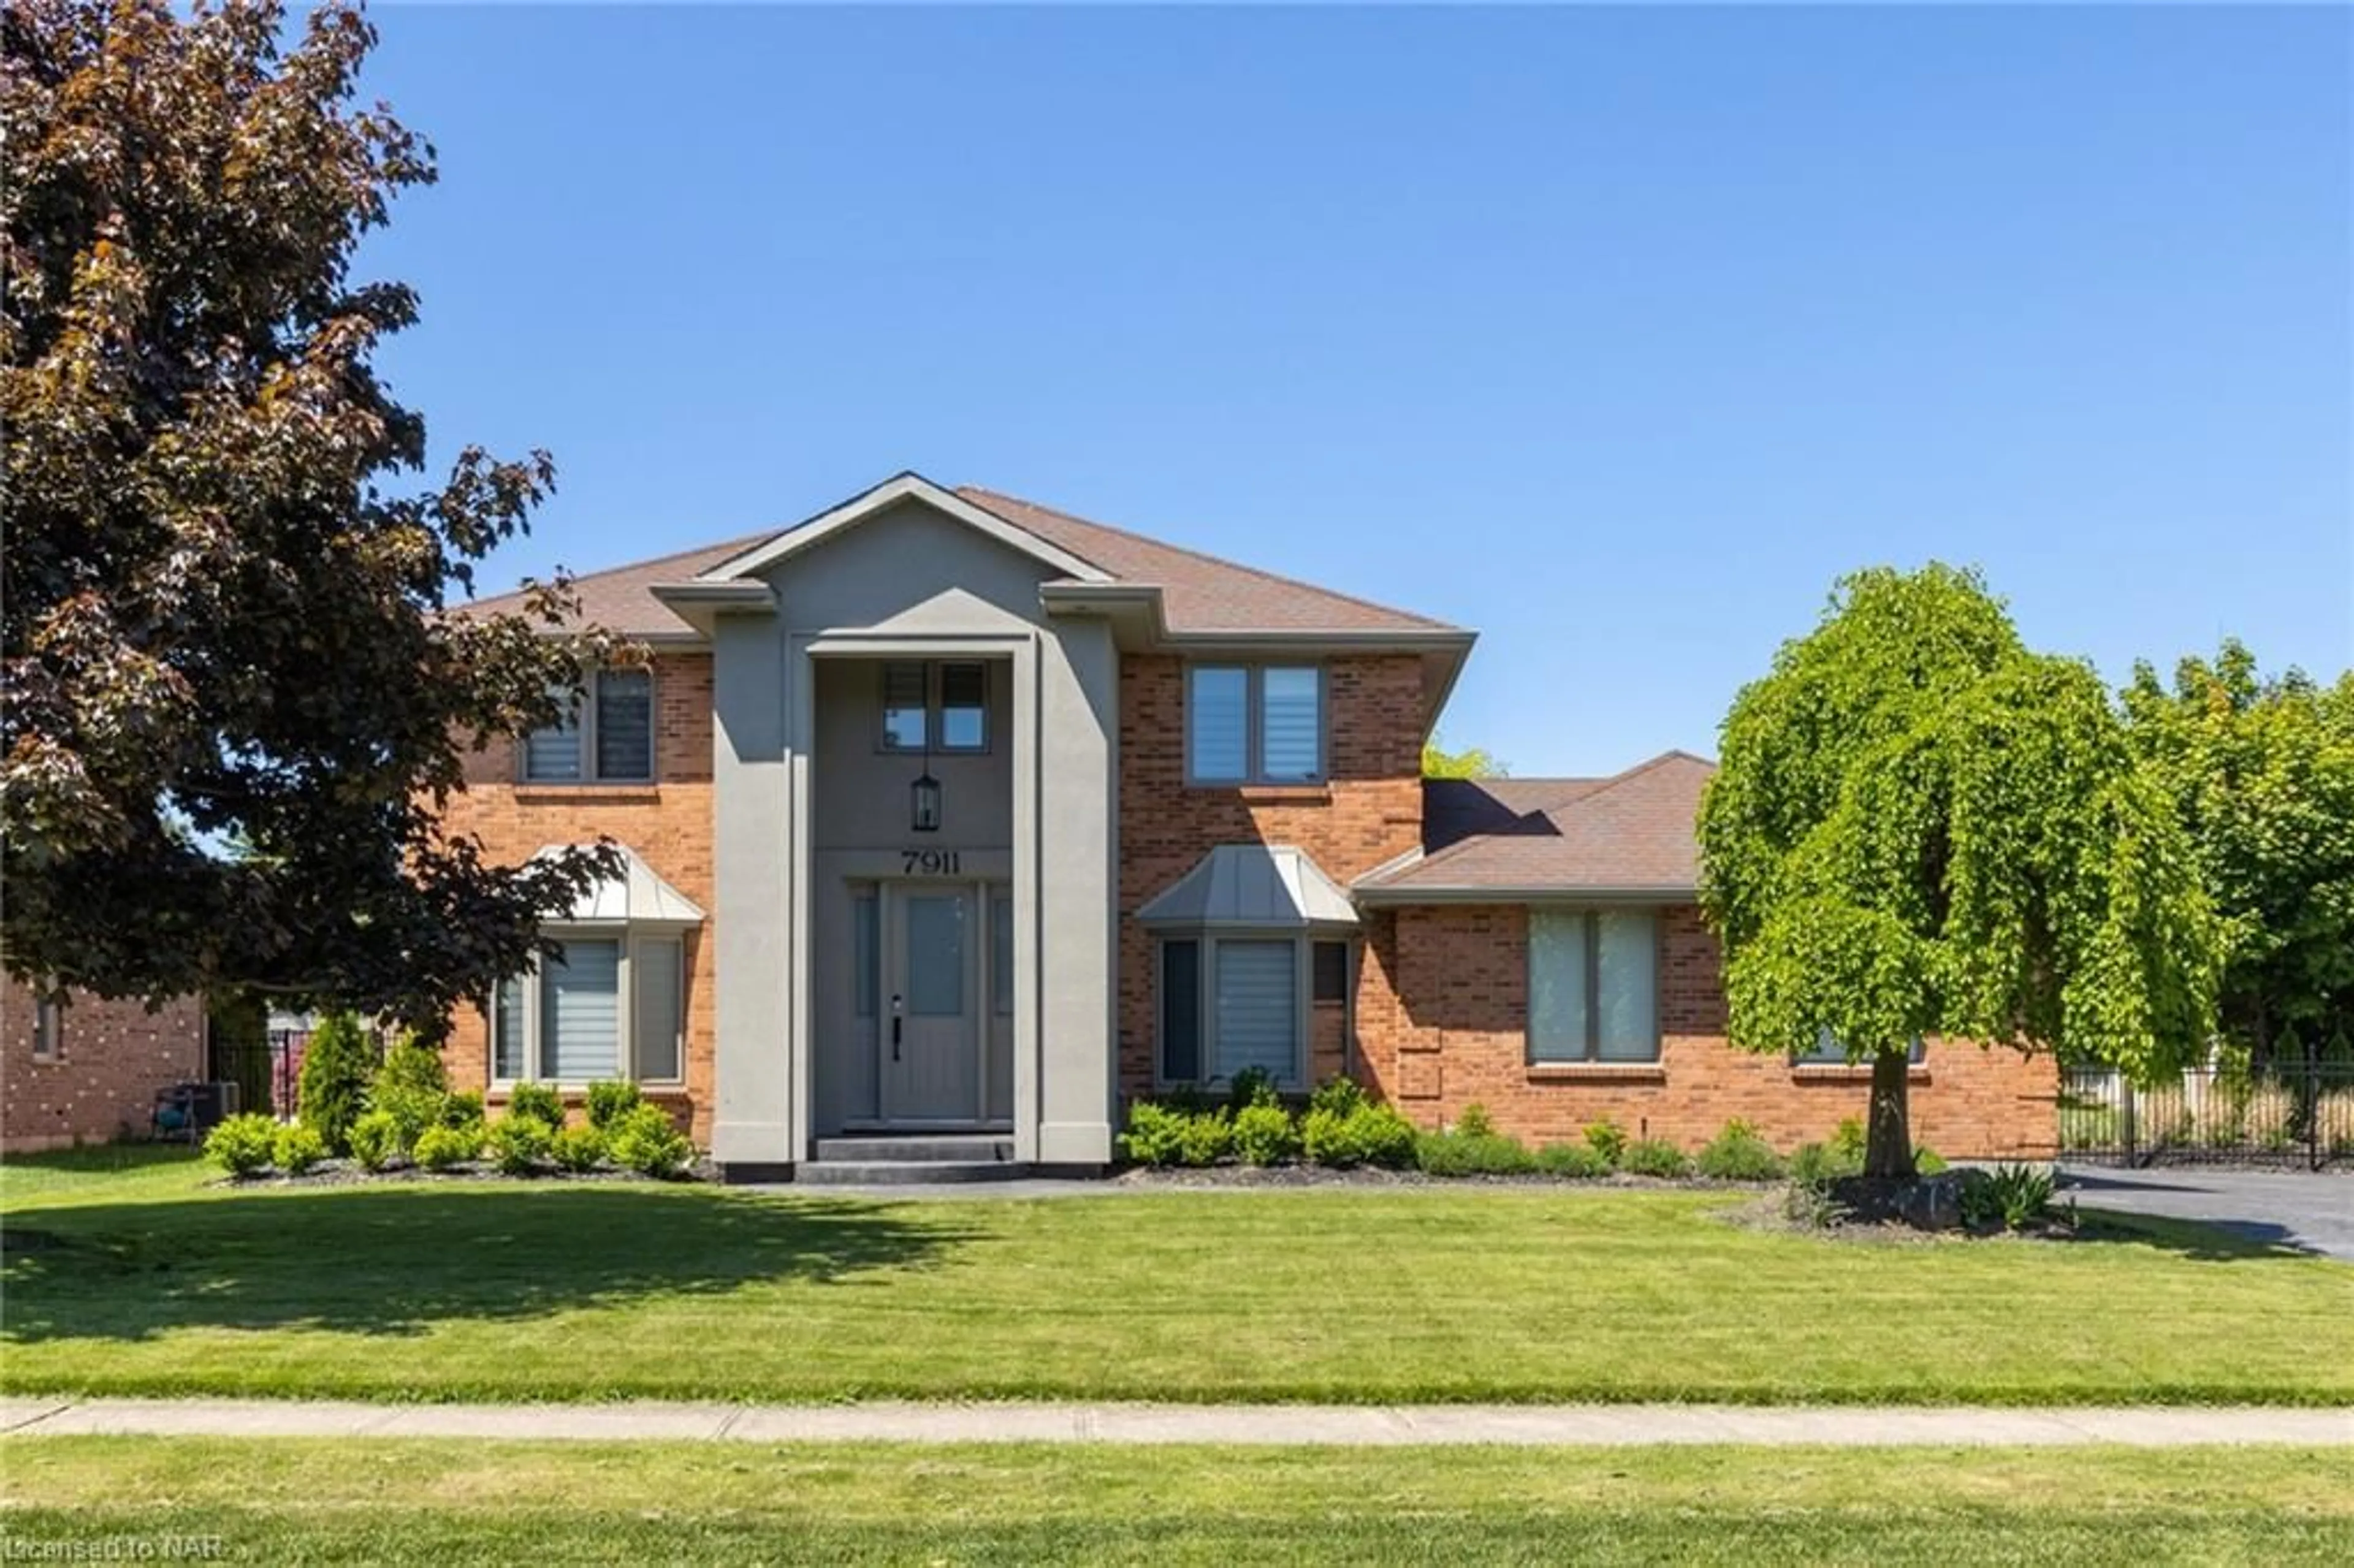 Home with brick exterior material for 7911 Westminster Dr, Niagara Falls Ontario L2H 2Z4